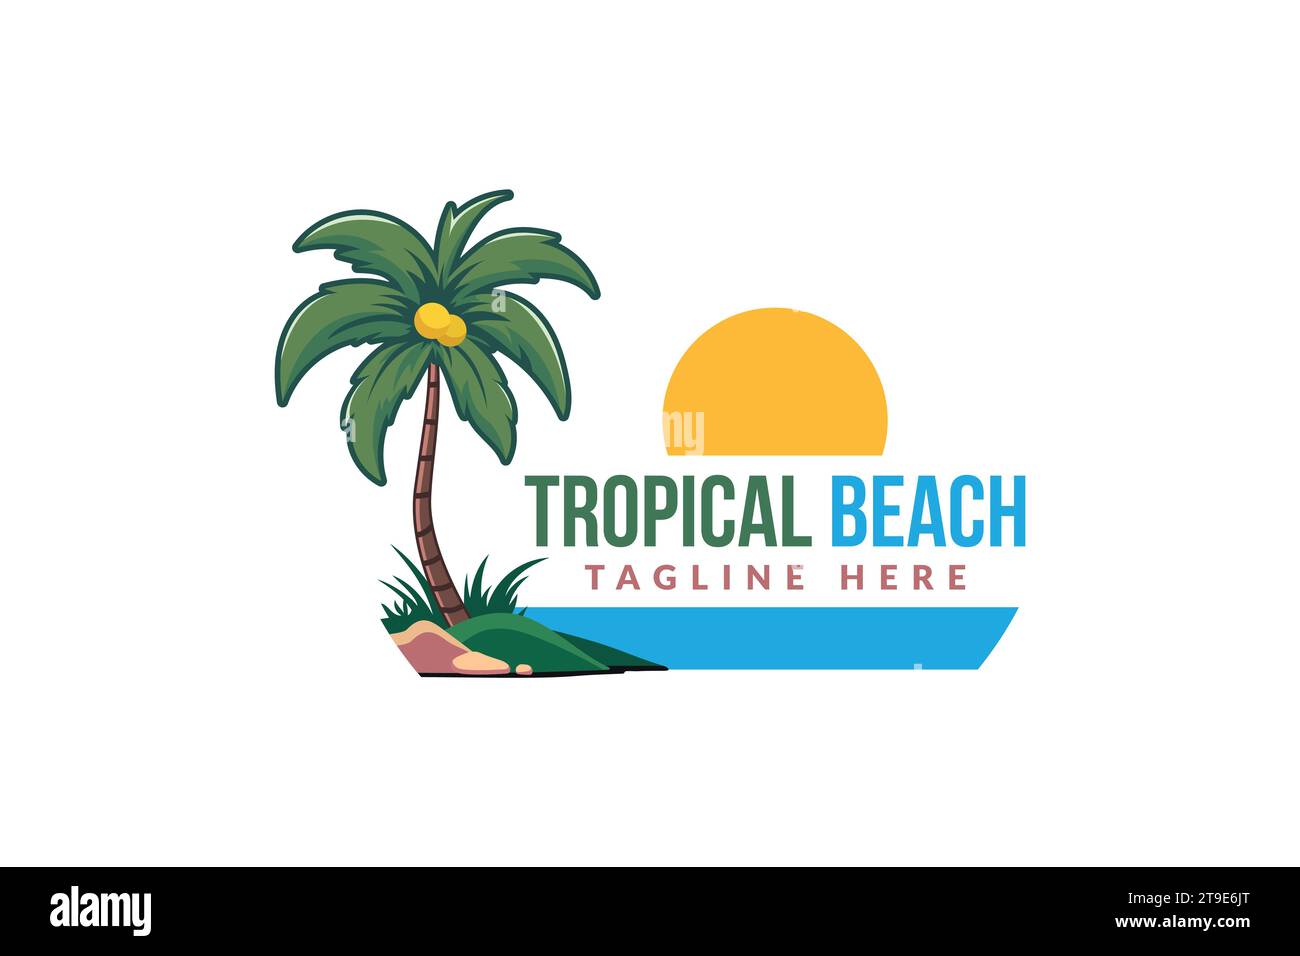 Tropisches Strandparadies Sommer Reise Urlaub Vektor Logo Konzept Illustration mit Palmen bei Sonnenuntergang Stock Vektor